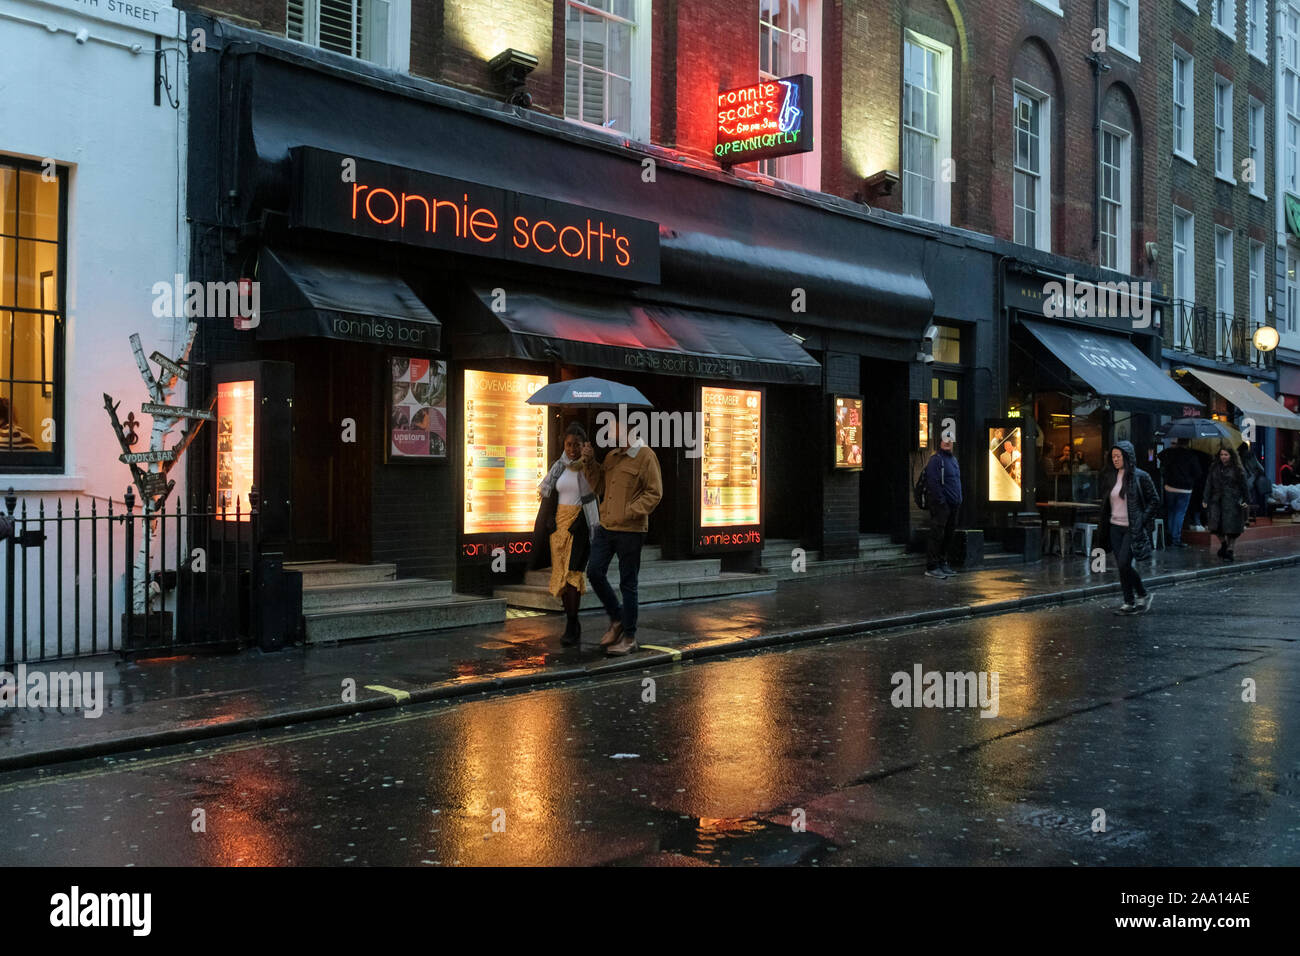 The famous Ronnie Scott's jazz club, Frith street, Soho, London, UK Stock Photo